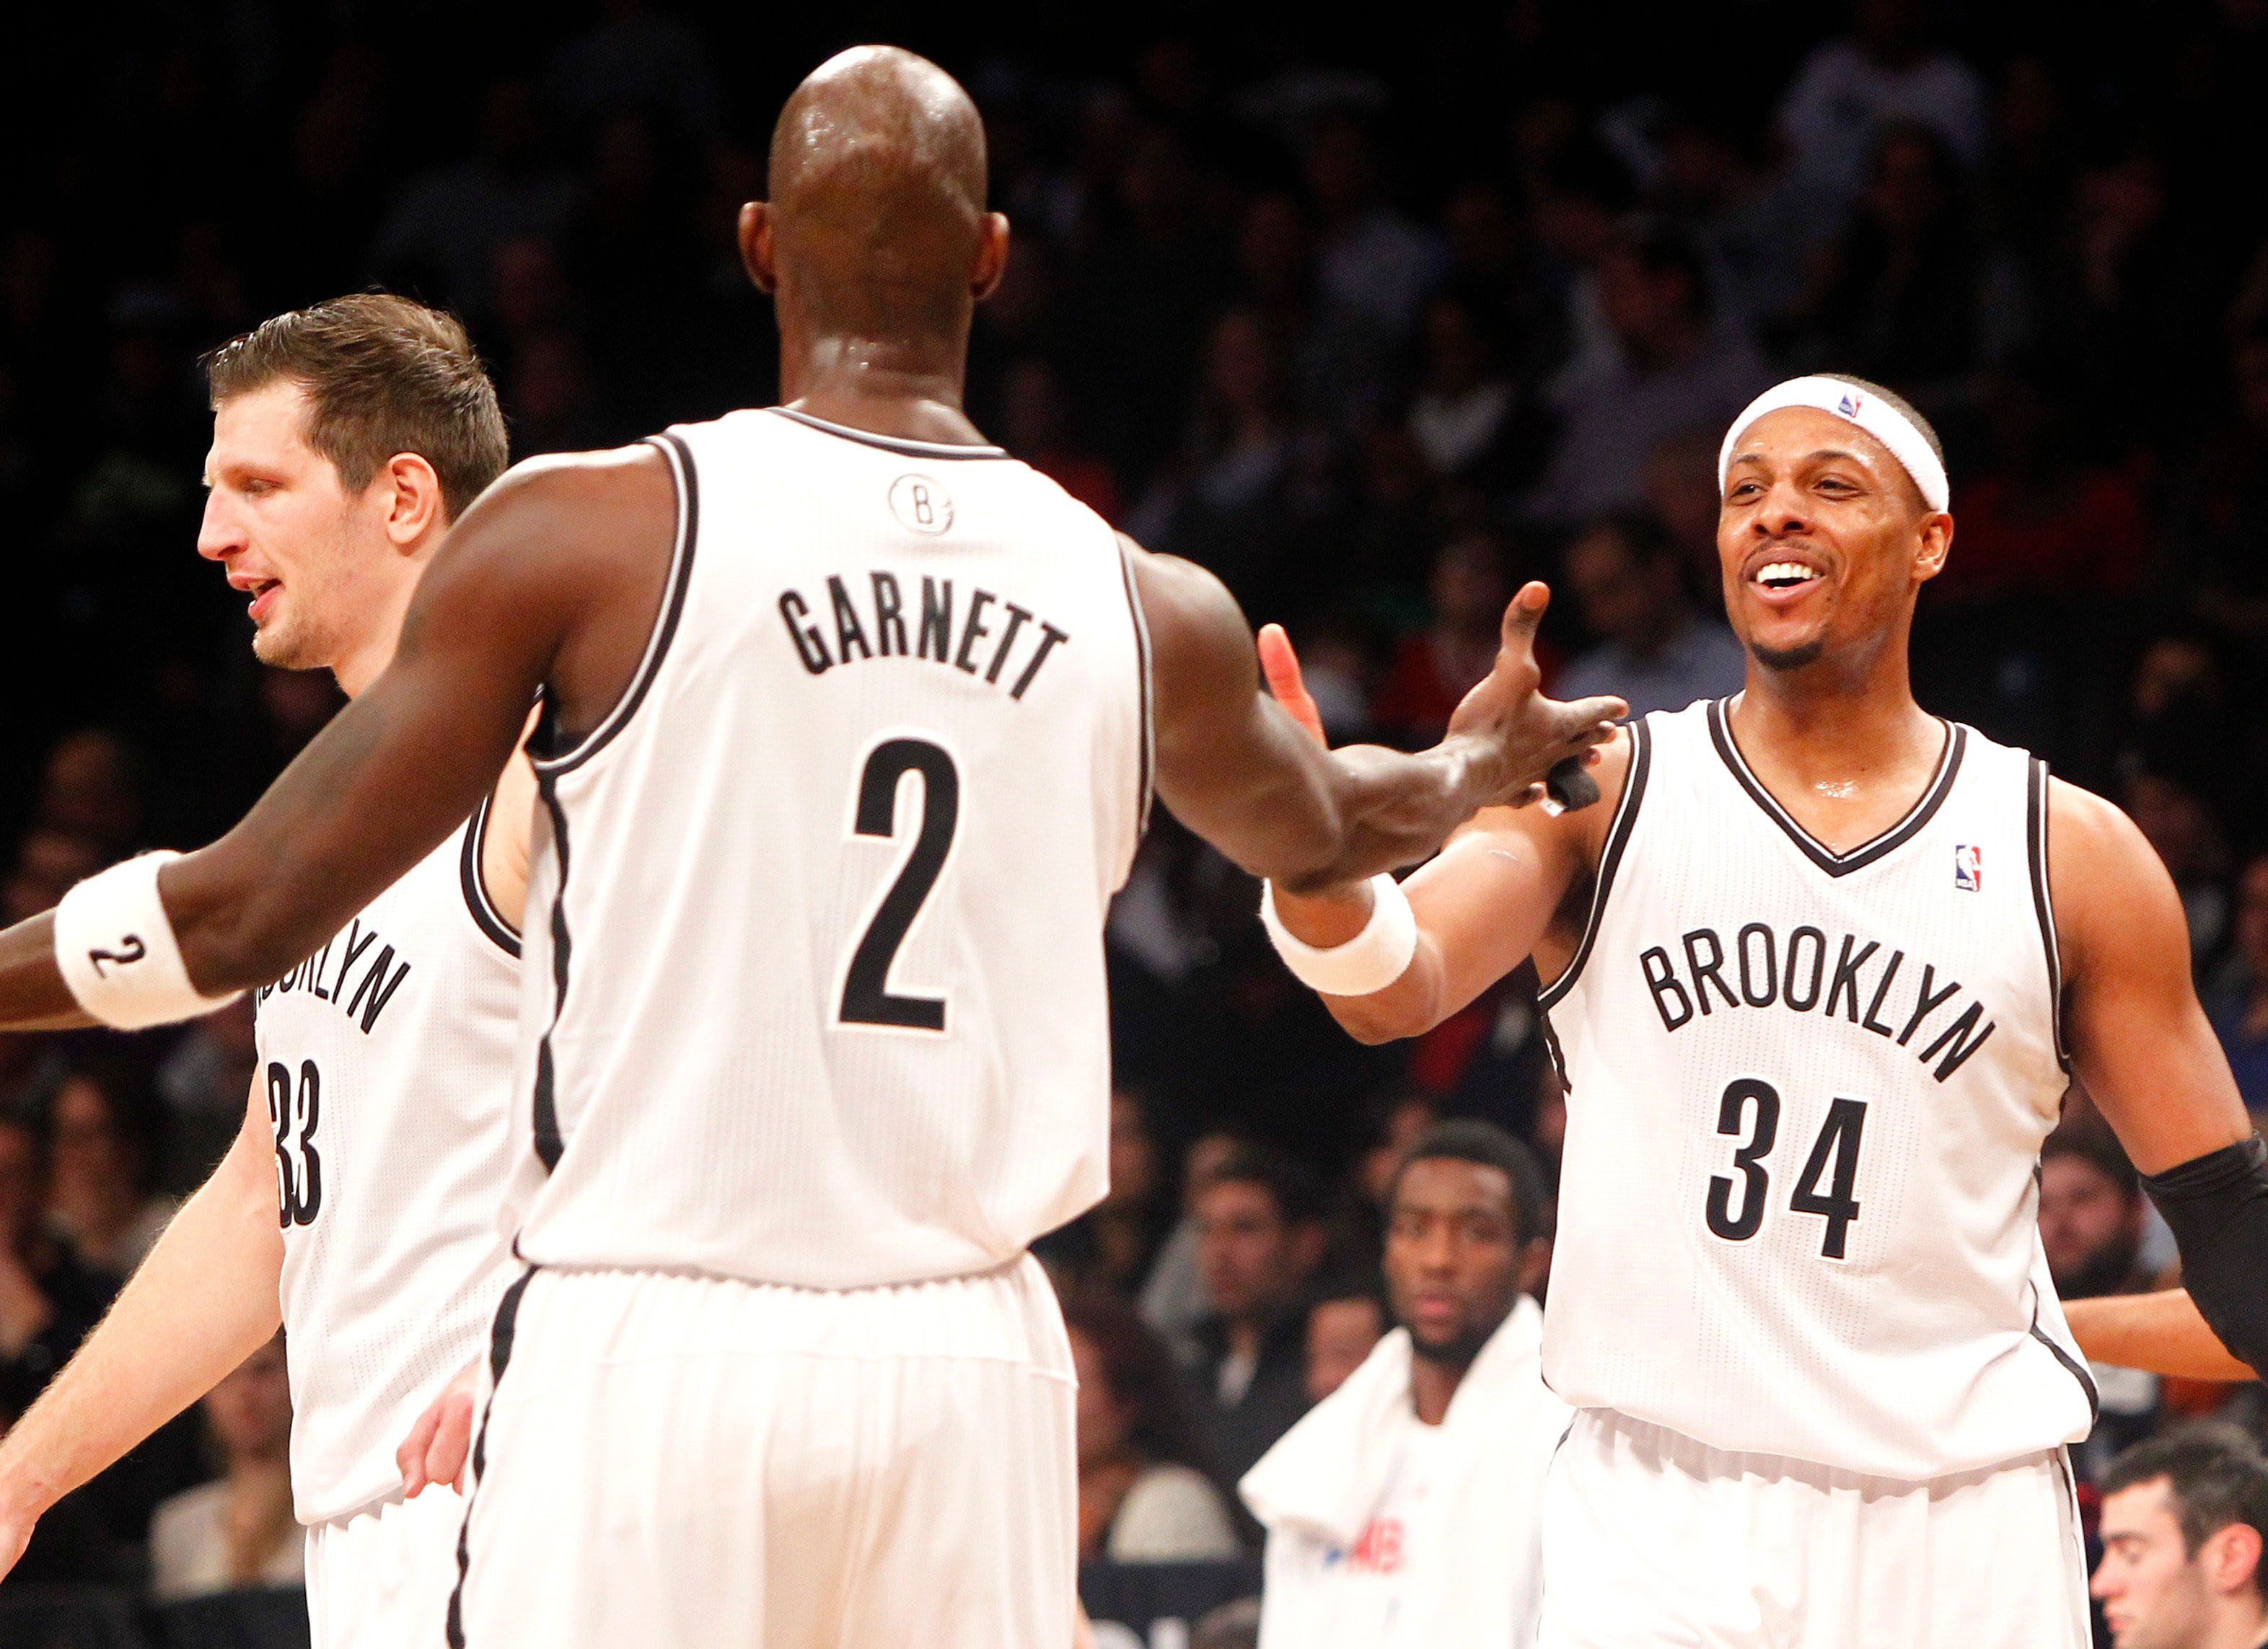 Brooklyn Nets 'superteam' of Kevin Garnett and Paul Pierce